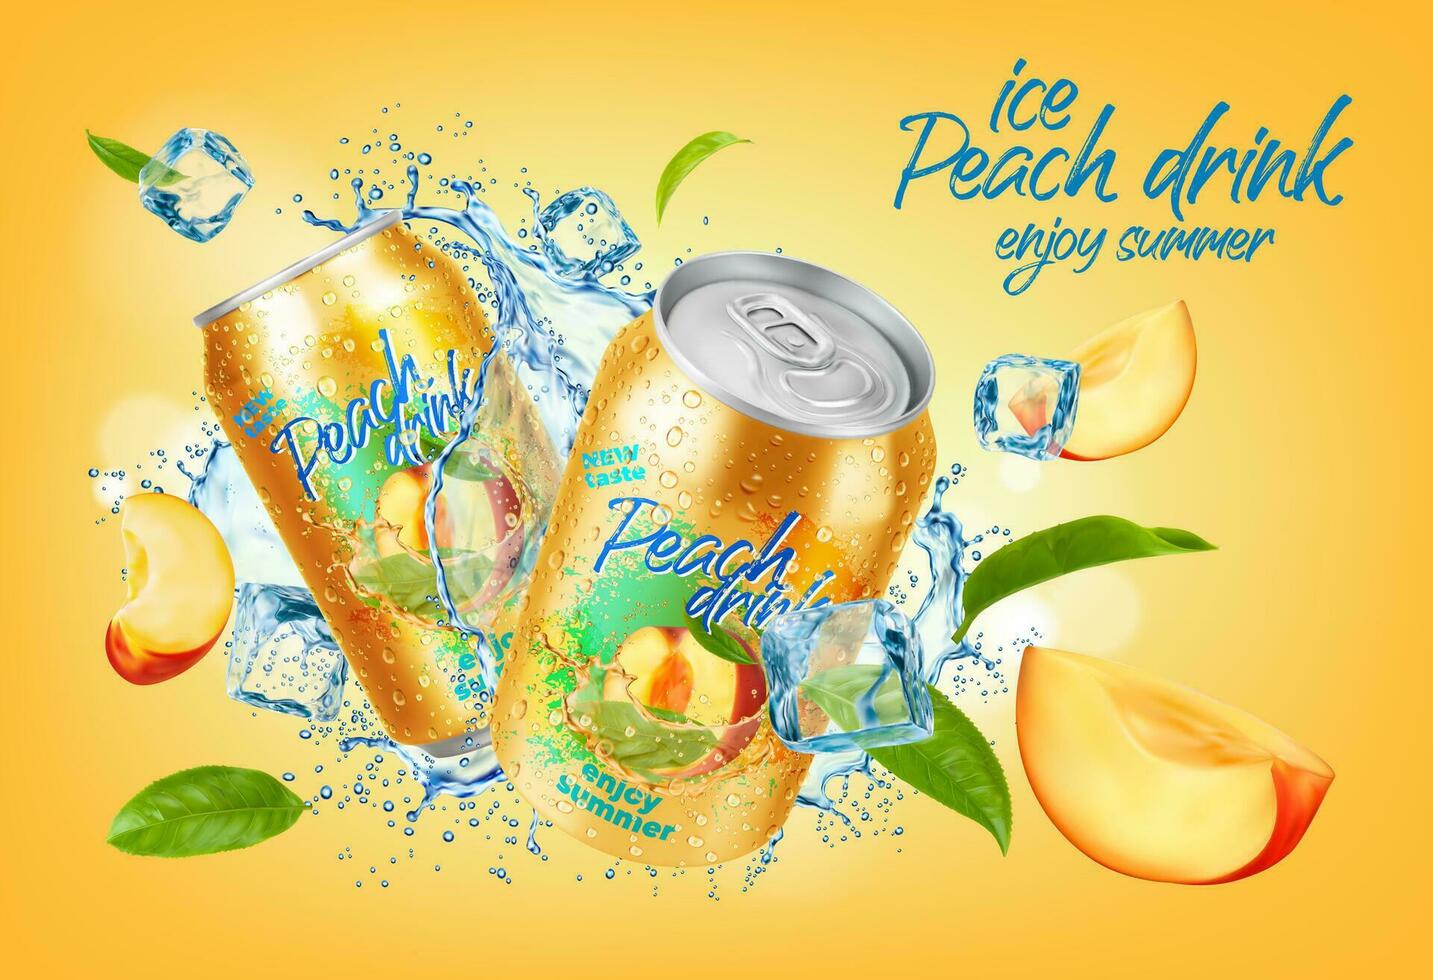 Ice peach drink can. Fruit, water swirl splash vector